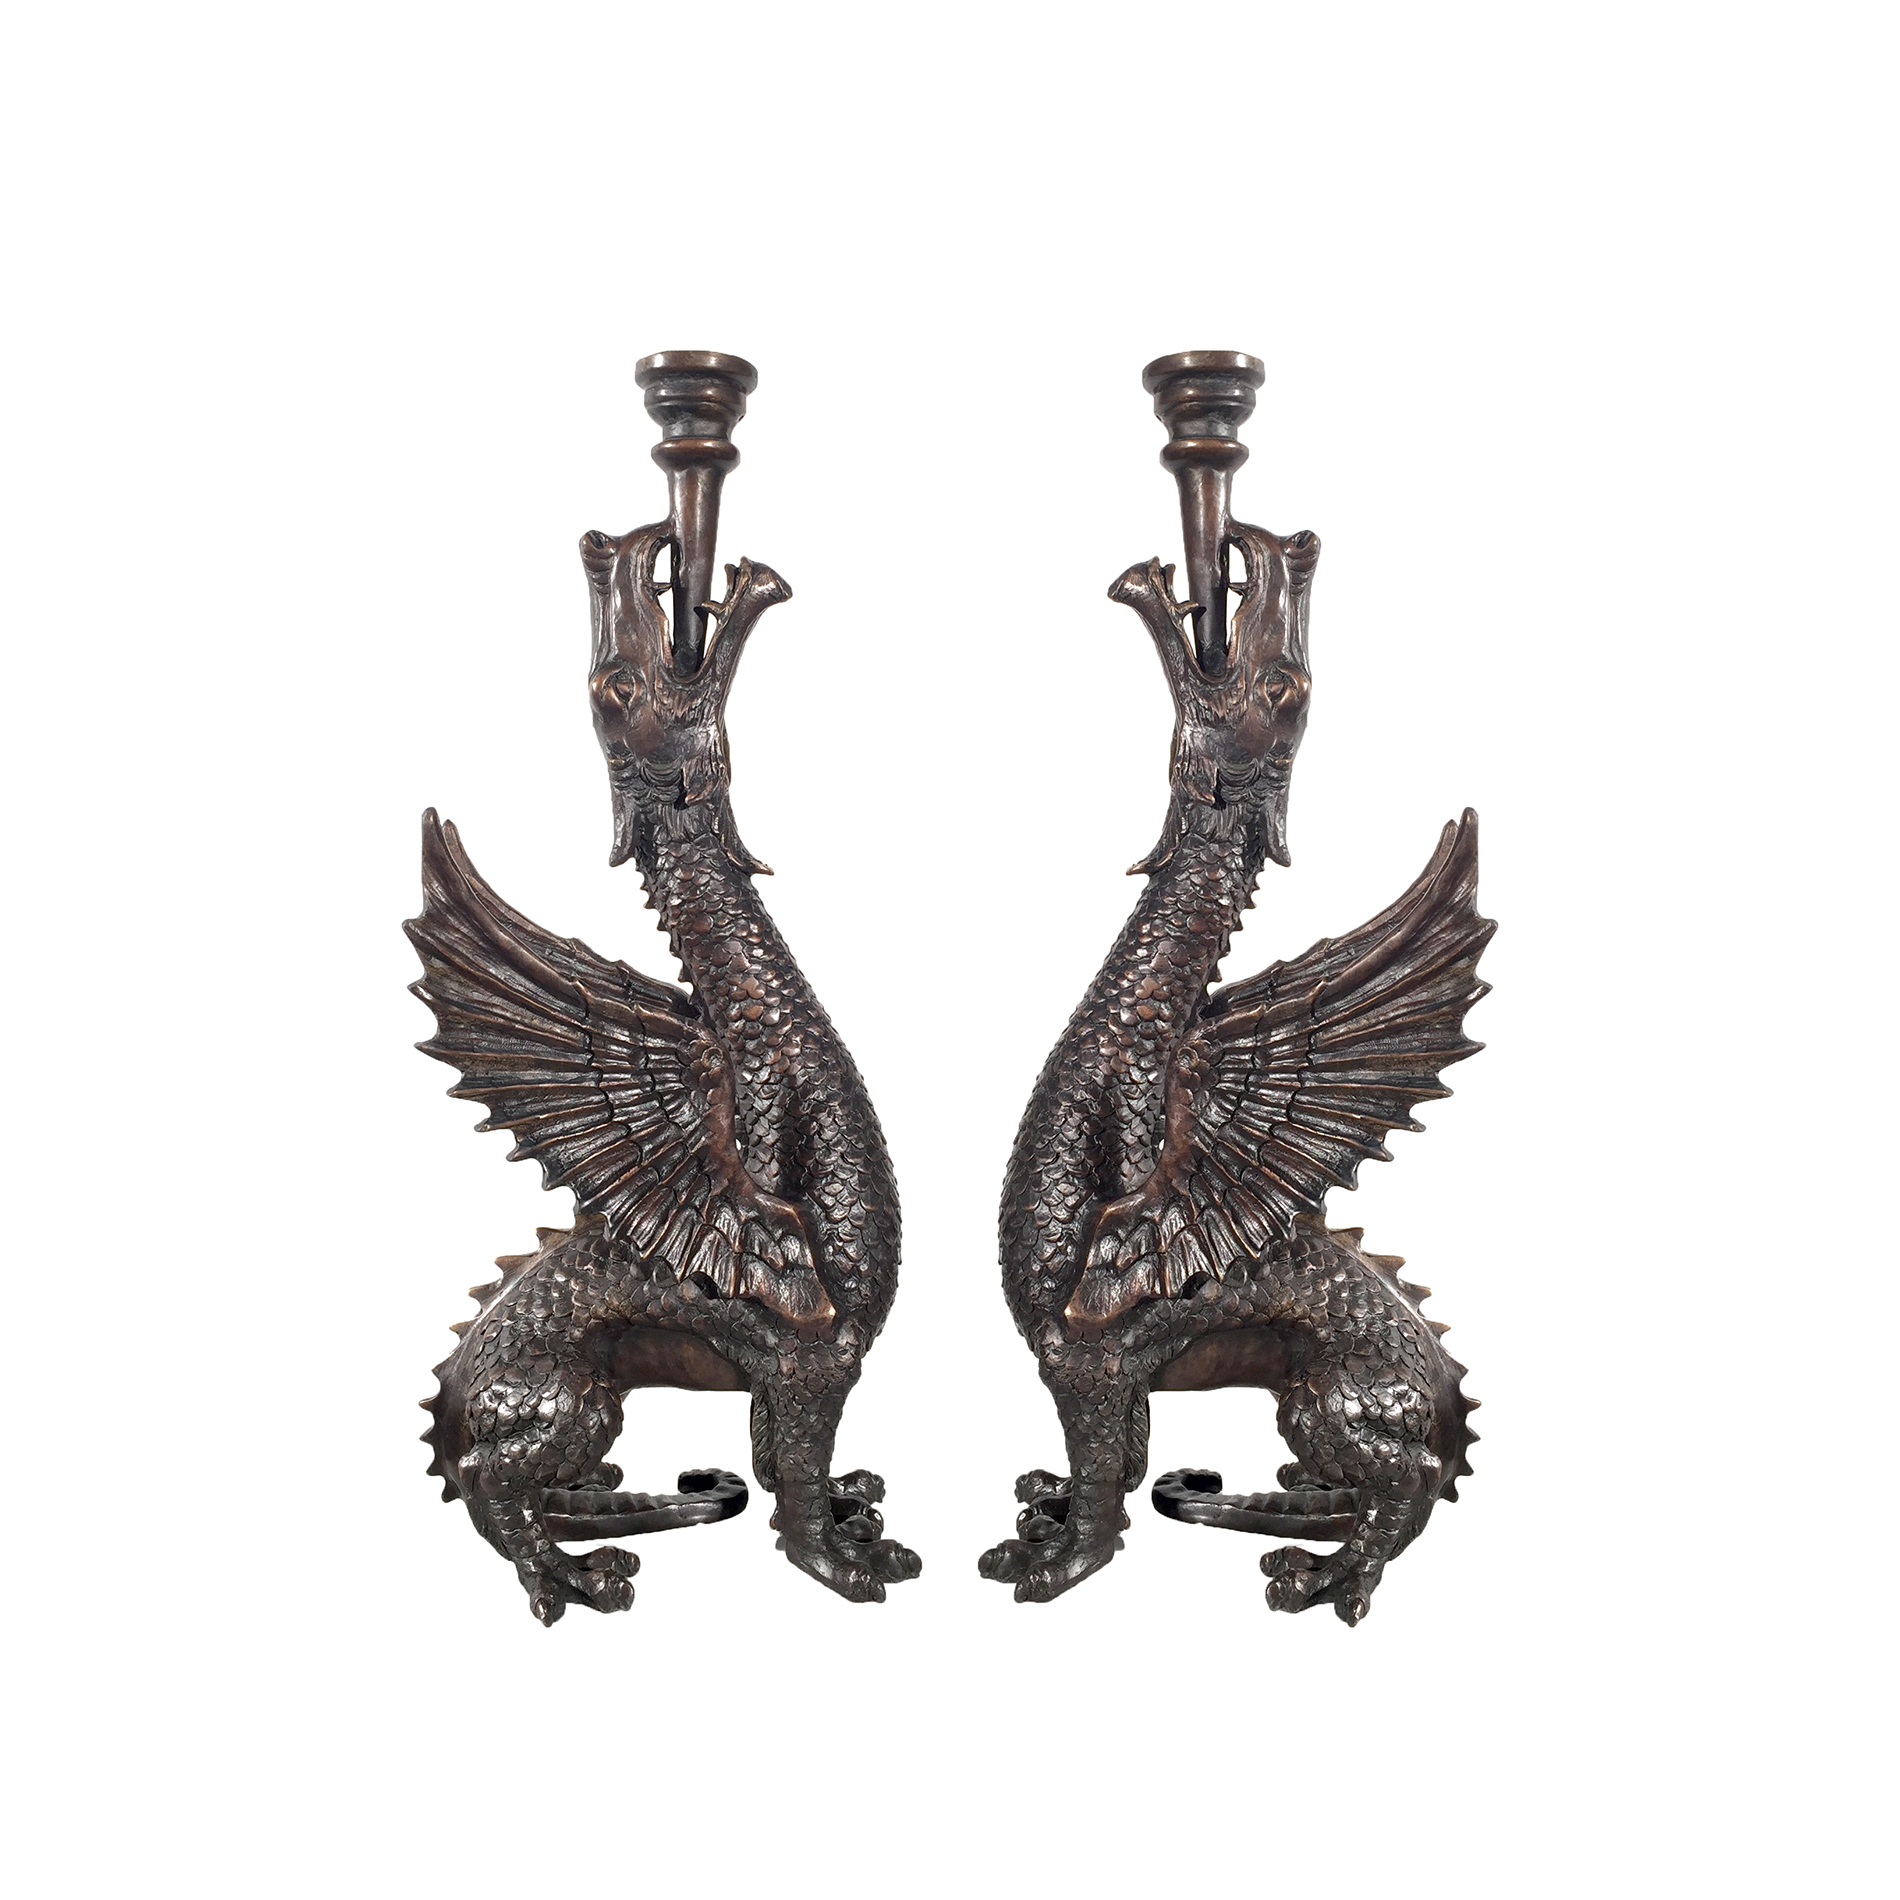 SRB701610 Bronze Dragon Candleholder Sculpture Pair with Brown Patina by Metropolitan Galleries Inc